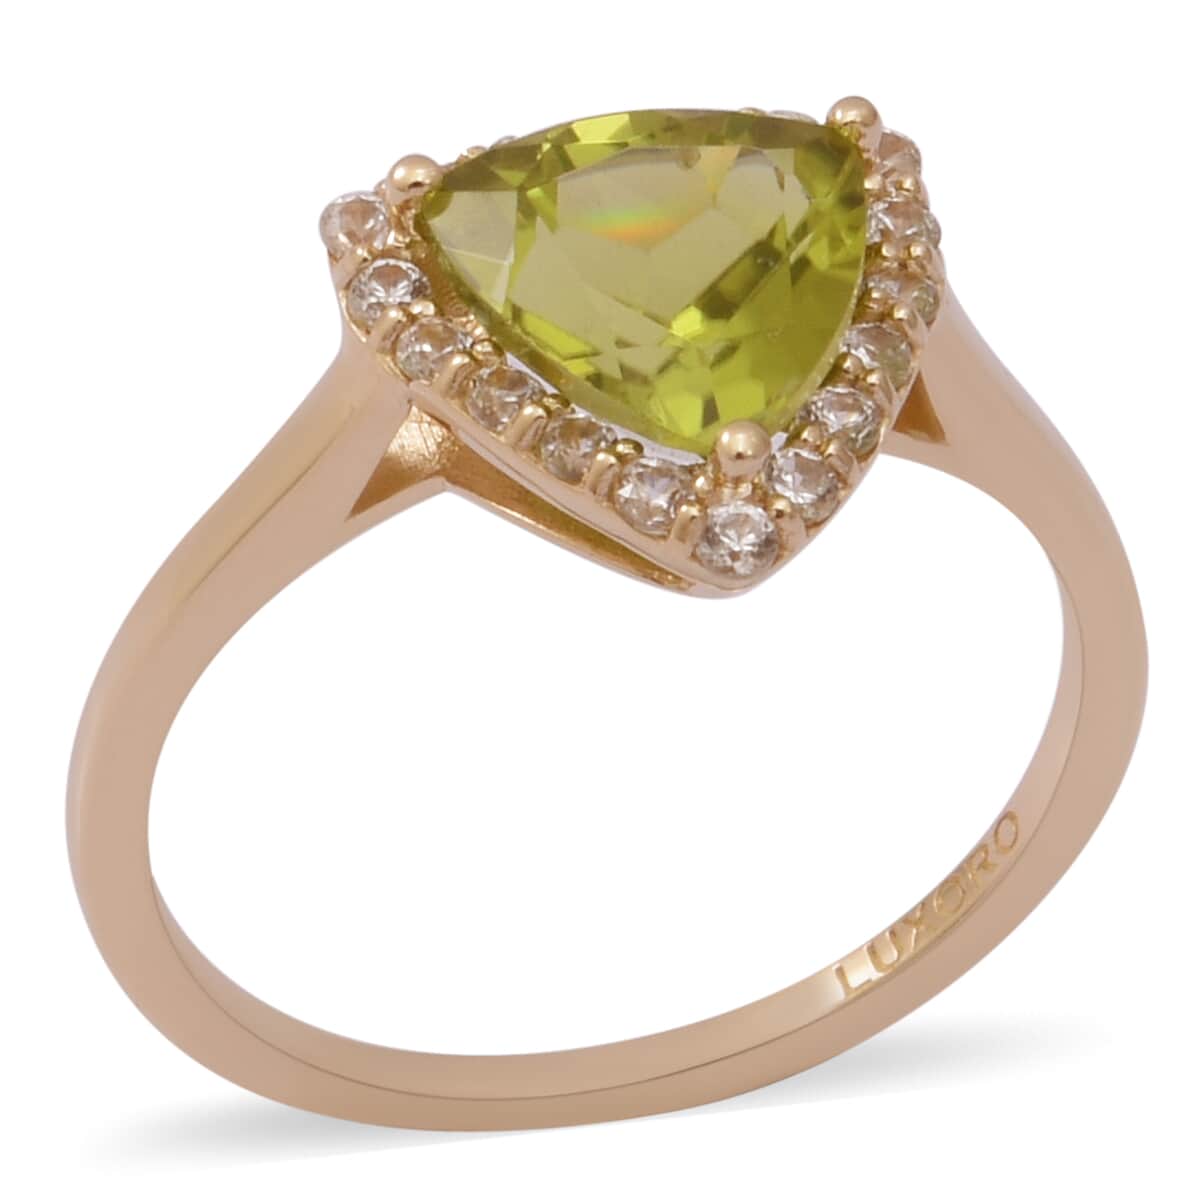 LUXORO 10K Yellow Gold Premium Peridot and White Zircon Halo Ring (Size 6.0) 2.30 ctw image number 2